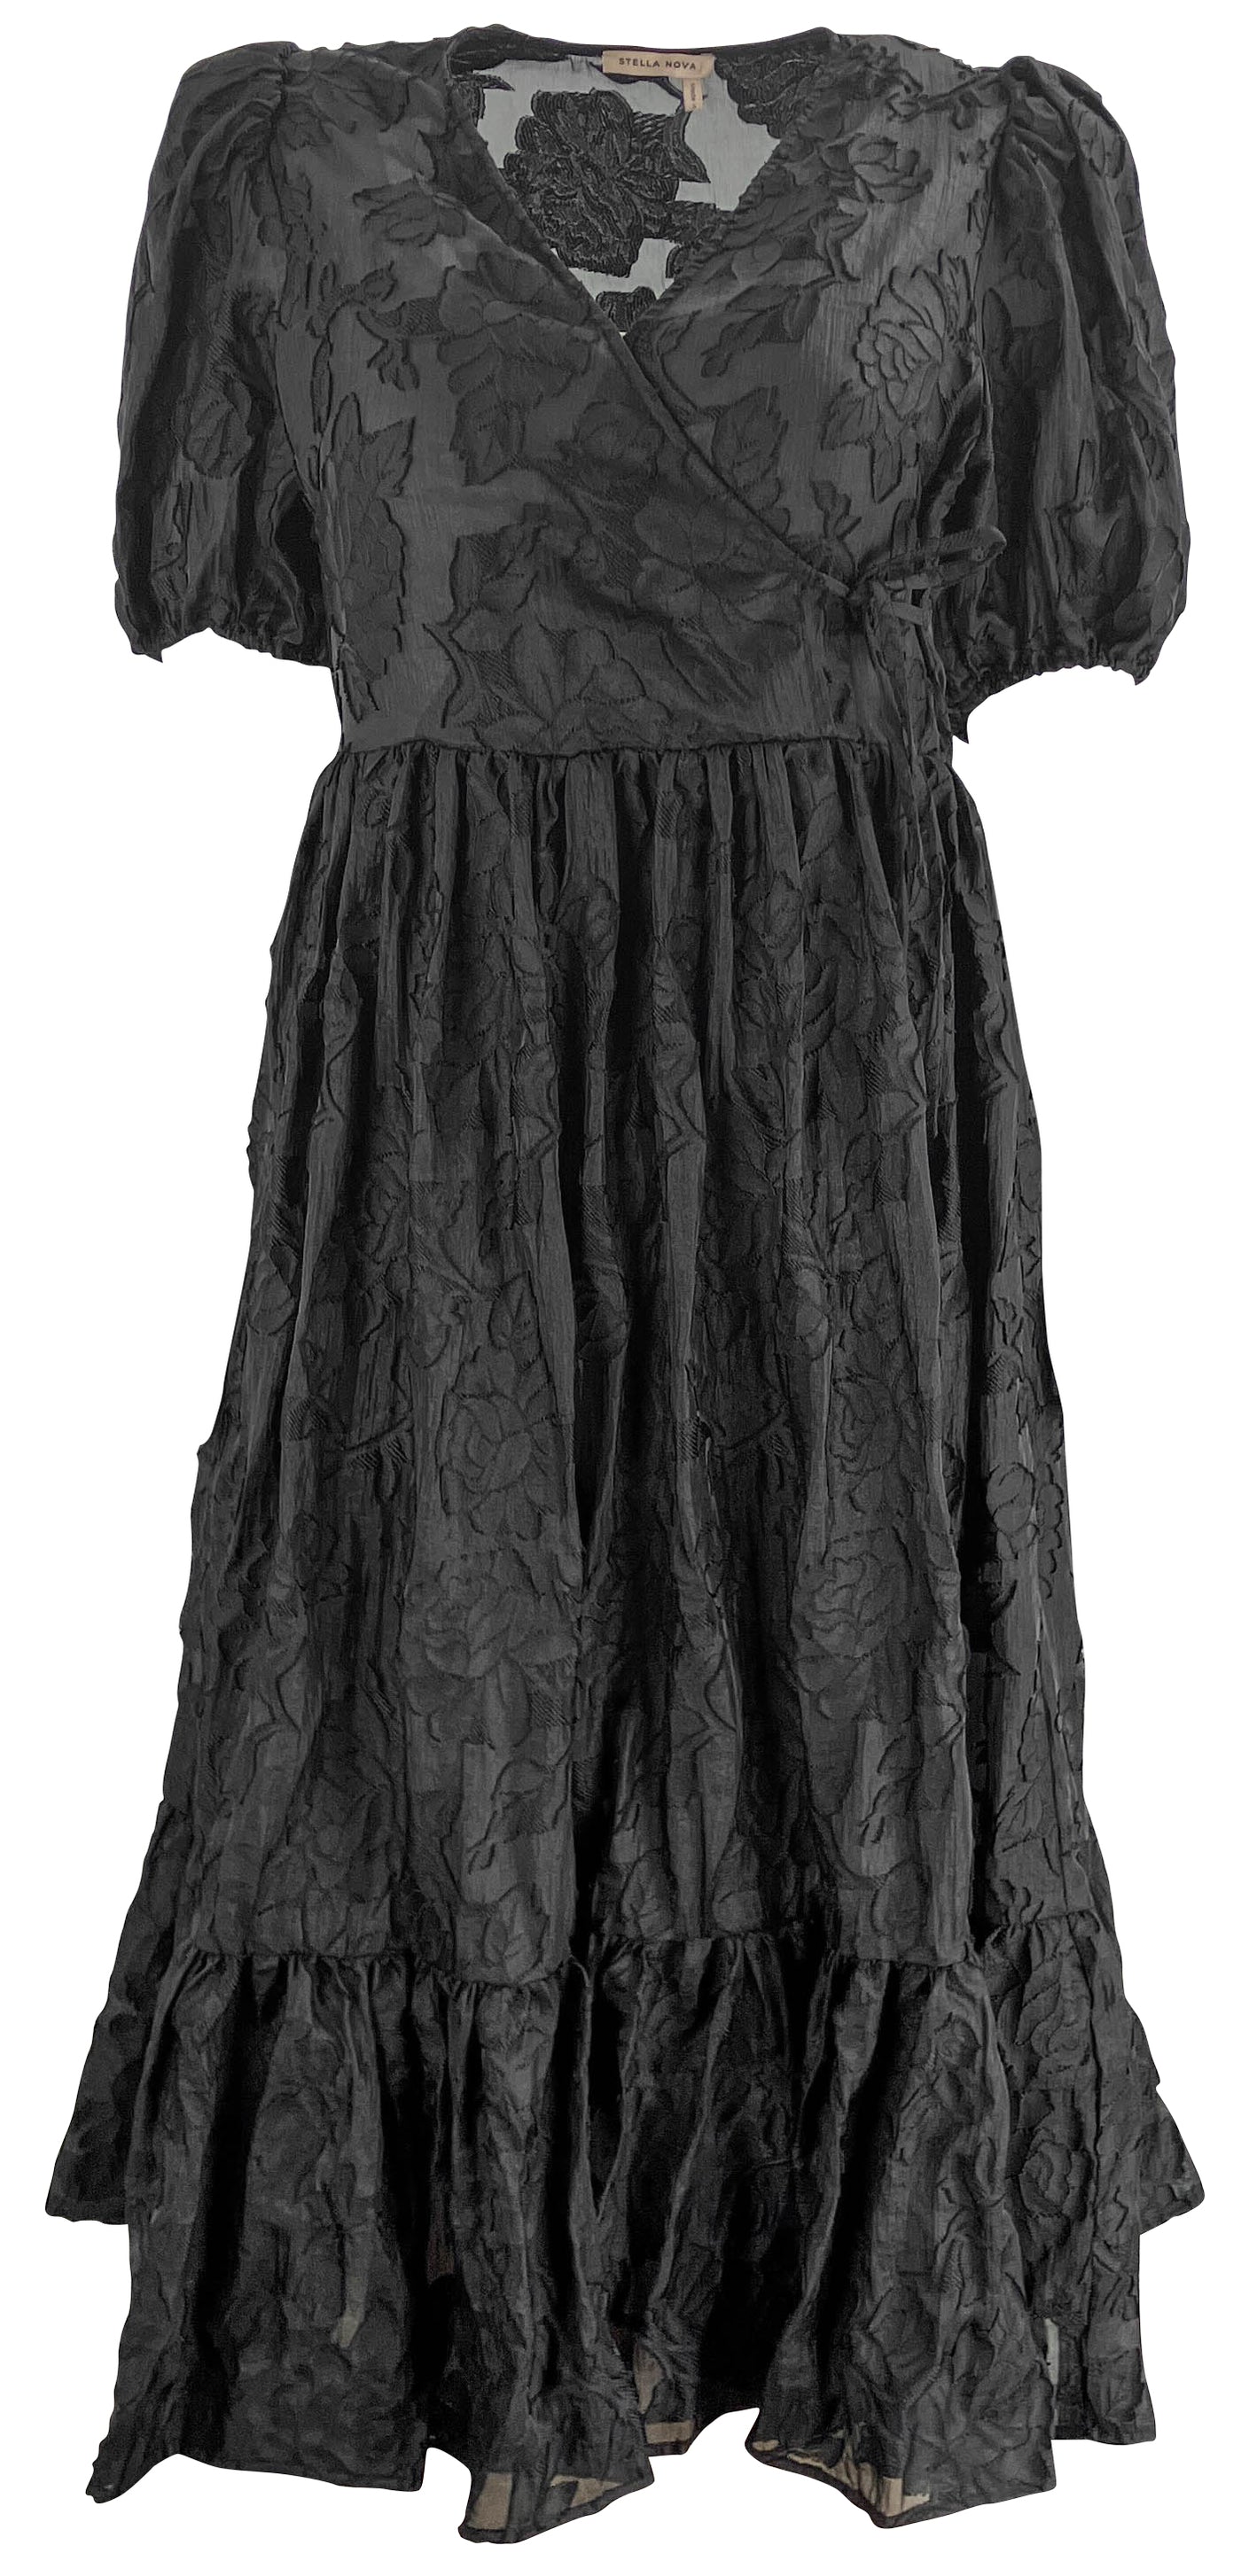 Stella Nova Trinke Jacquard Dress in Black - Discounts on Stella Nova at UAL